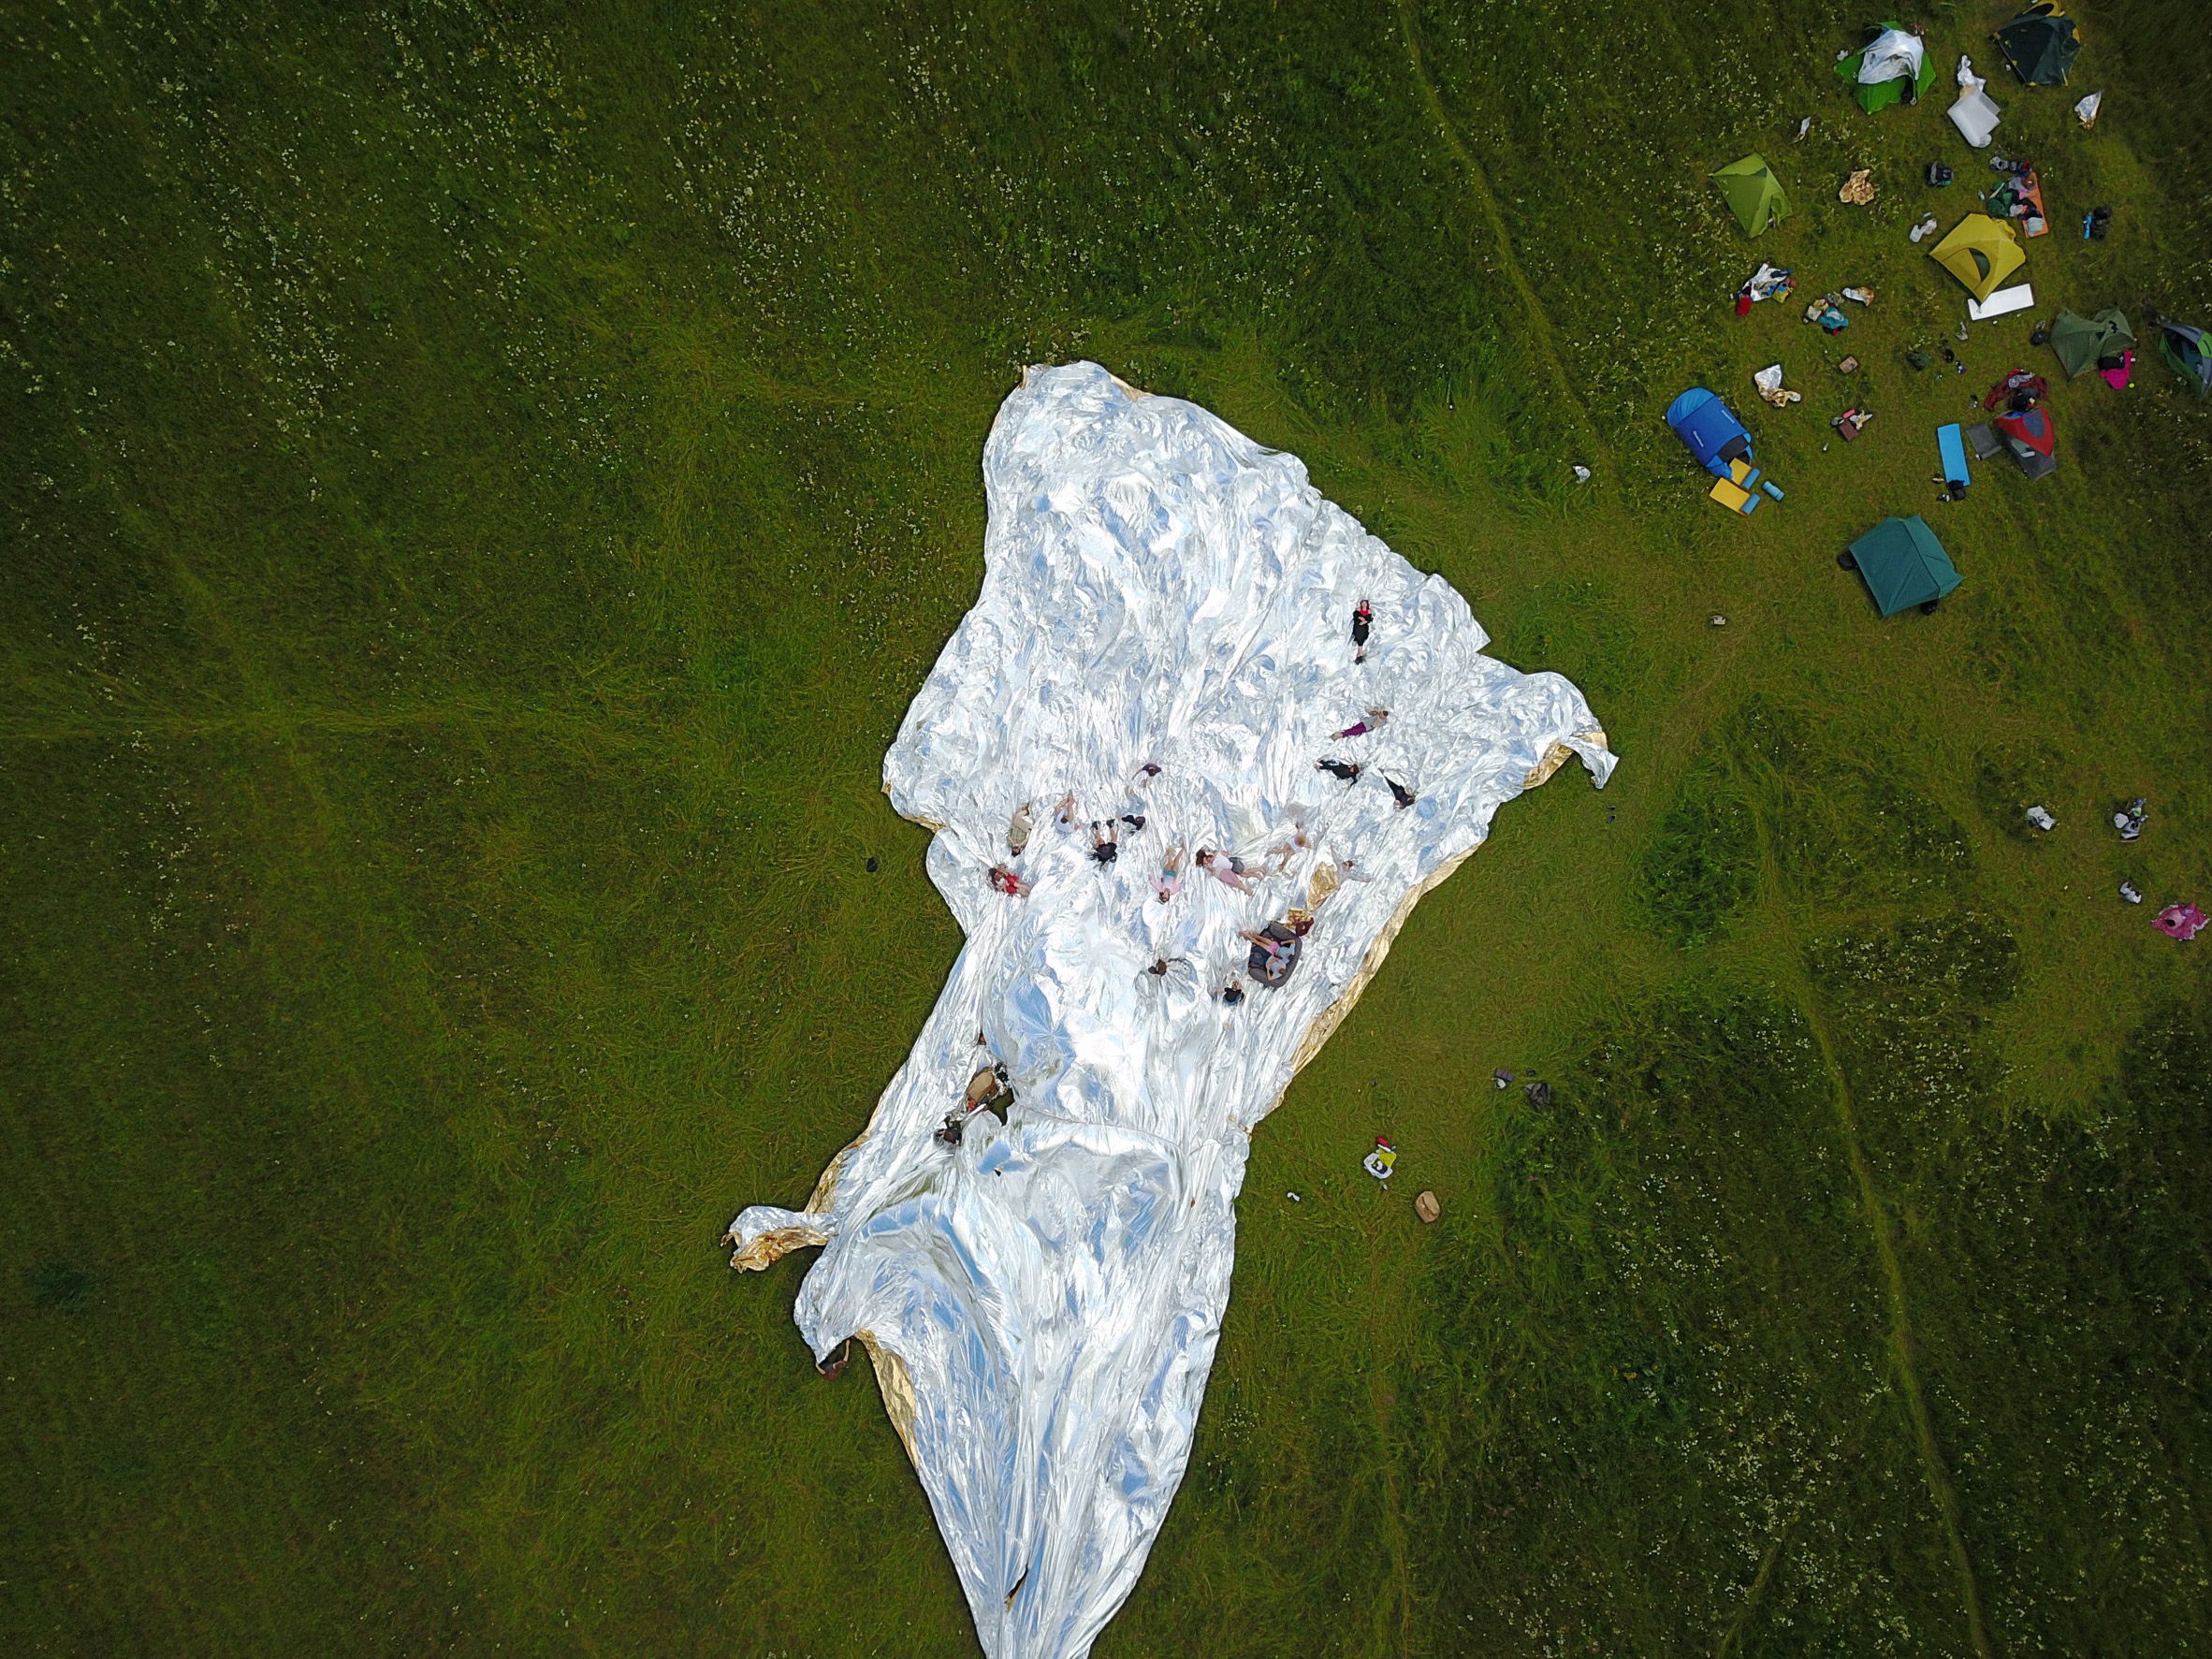 Massive NASA space blanket proposed as billowing Burning Man installation